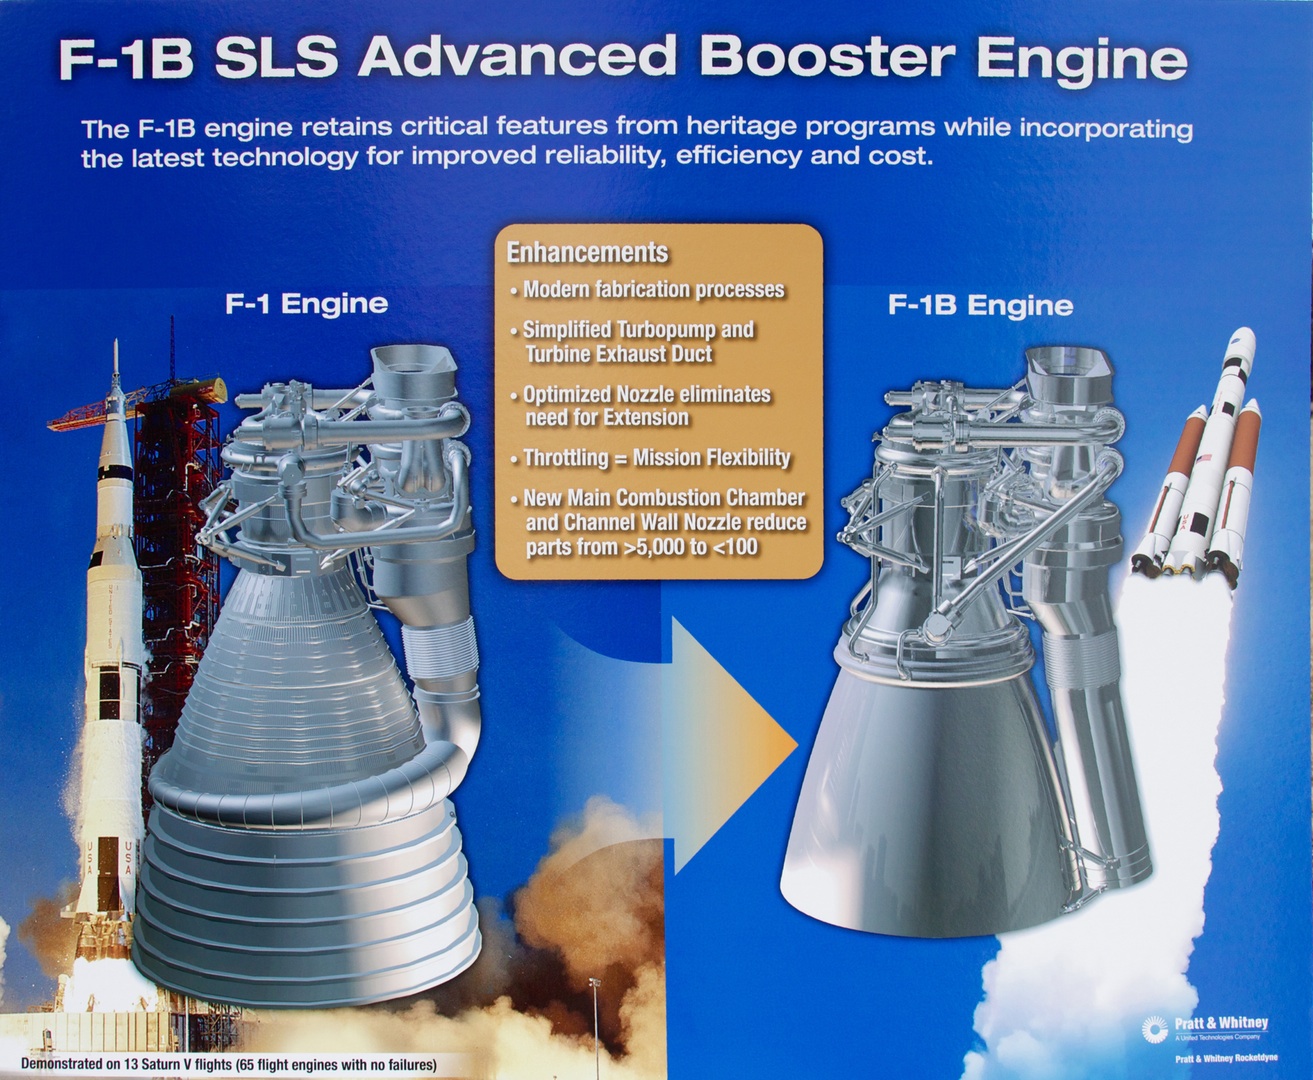 Model Rocket Engine Chart